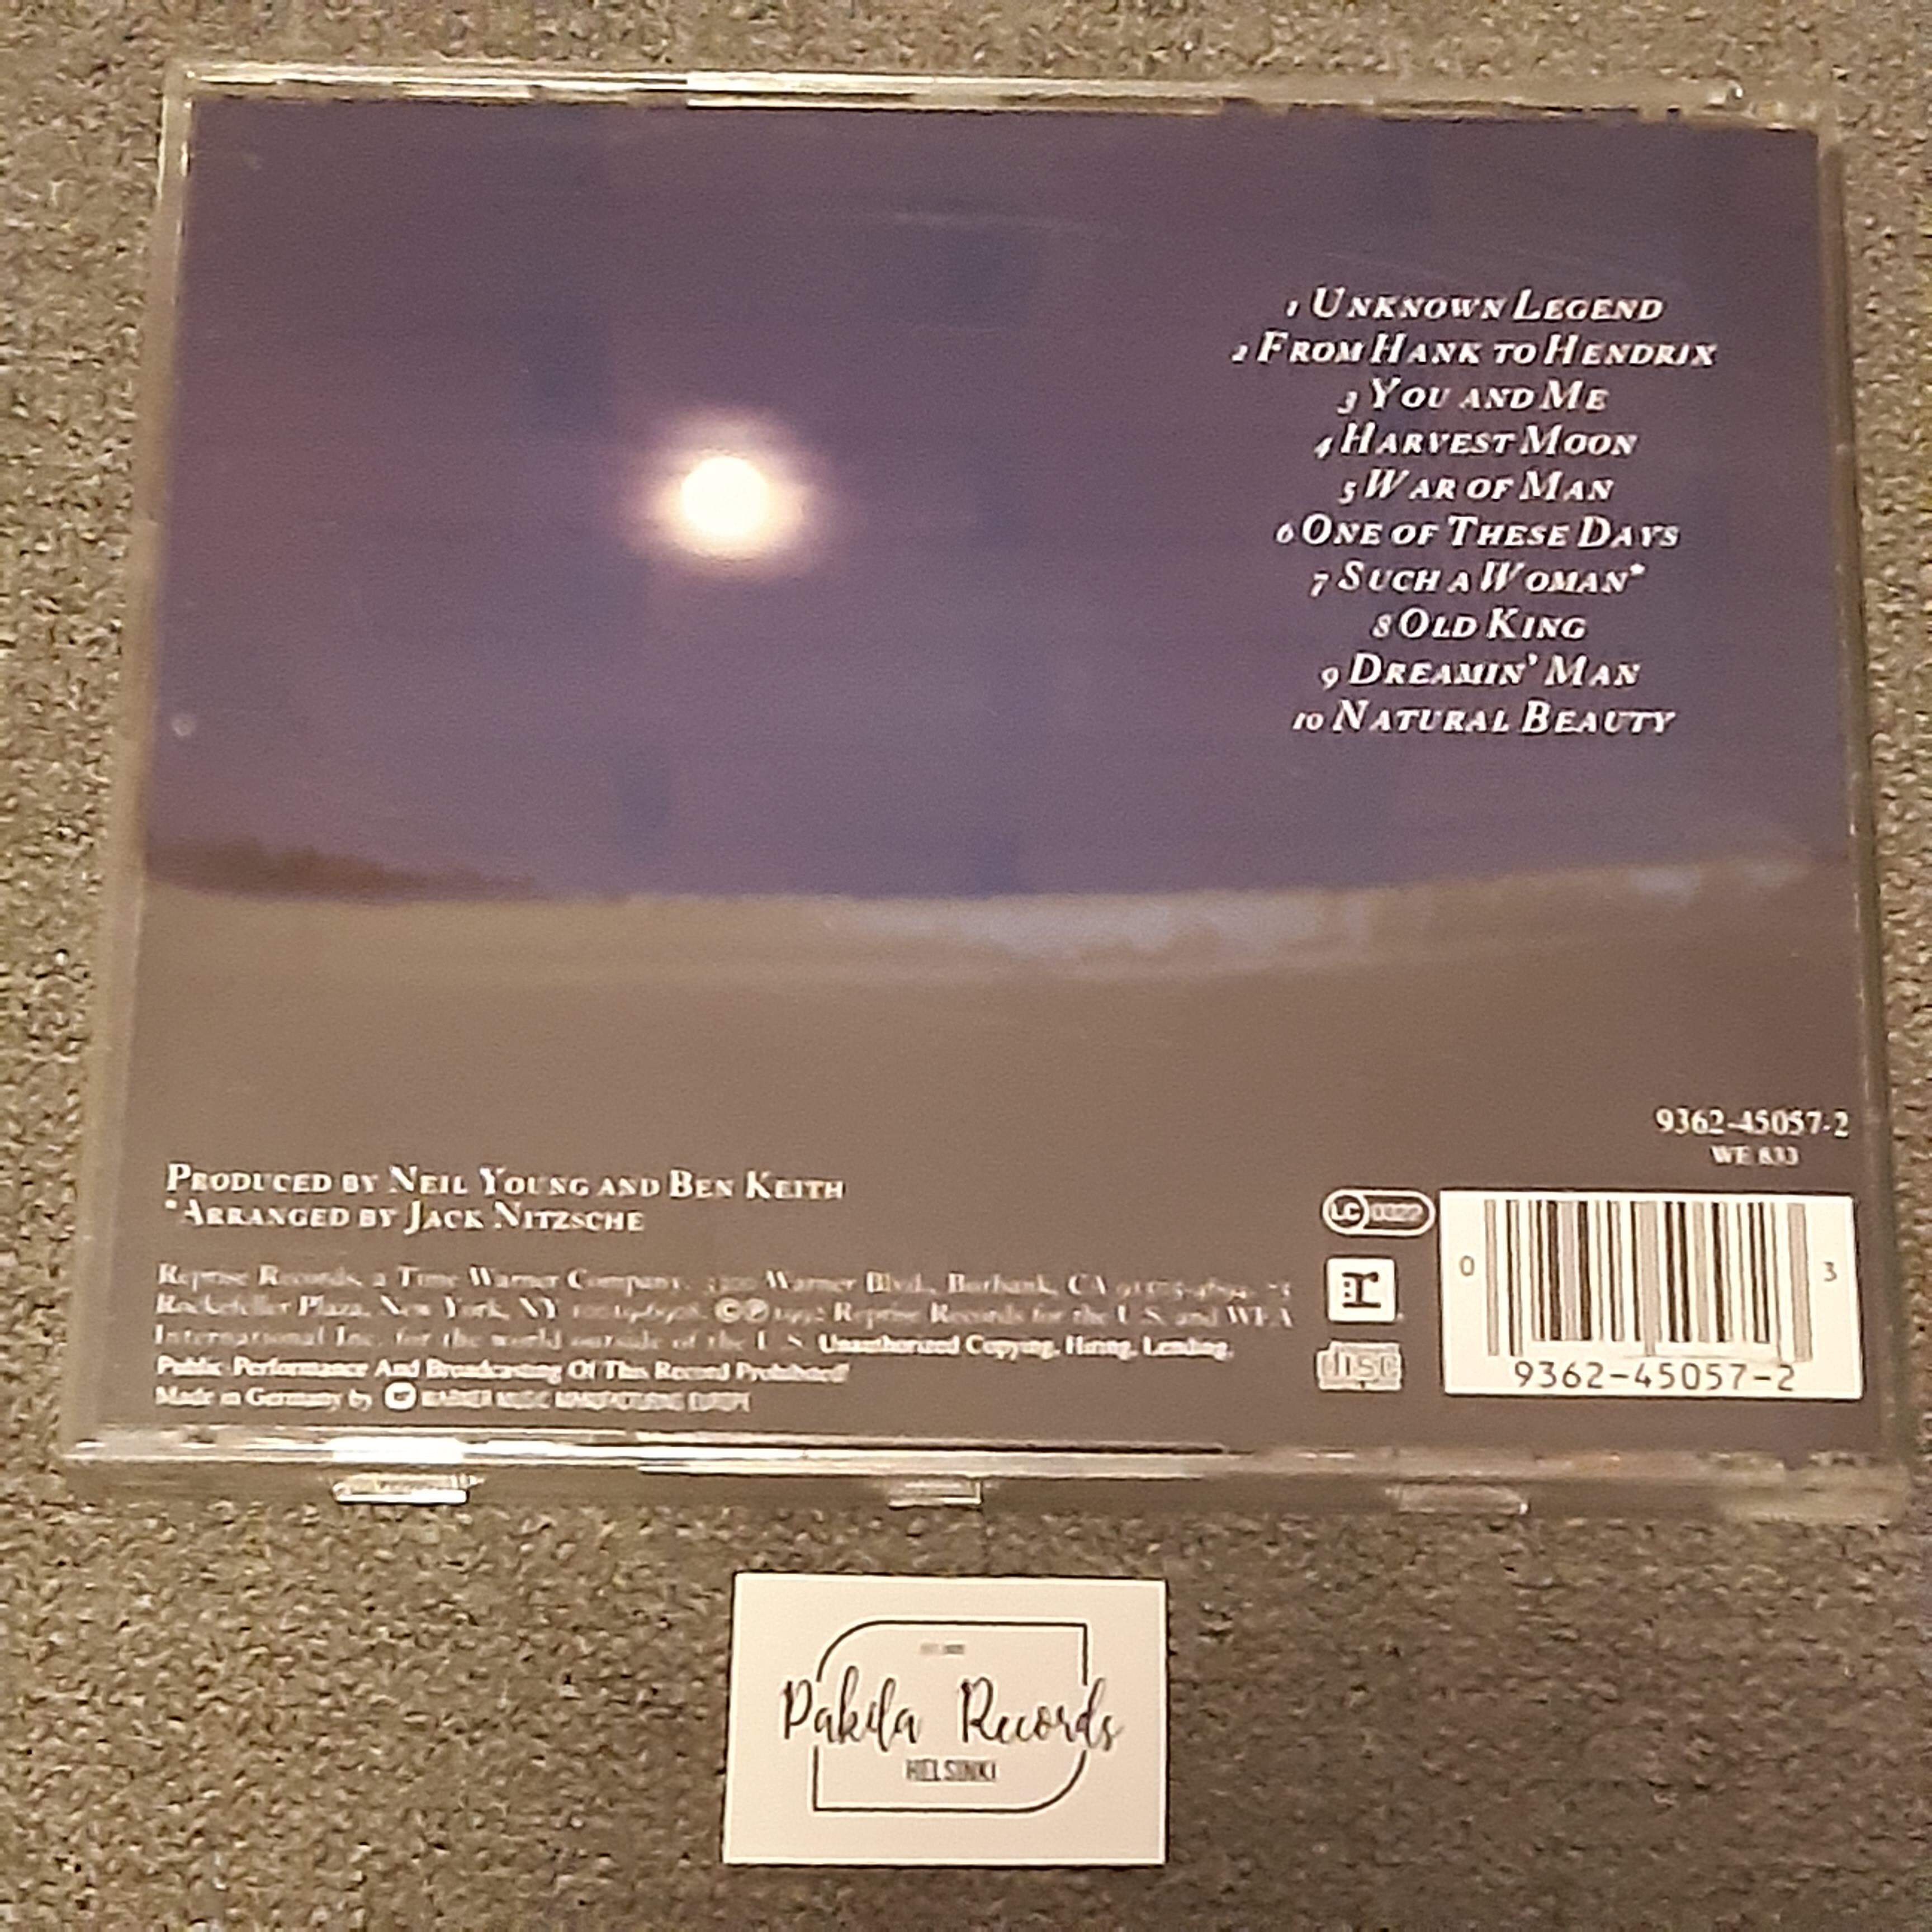 Neil Young - Harvest Moon - CD (käytetty)